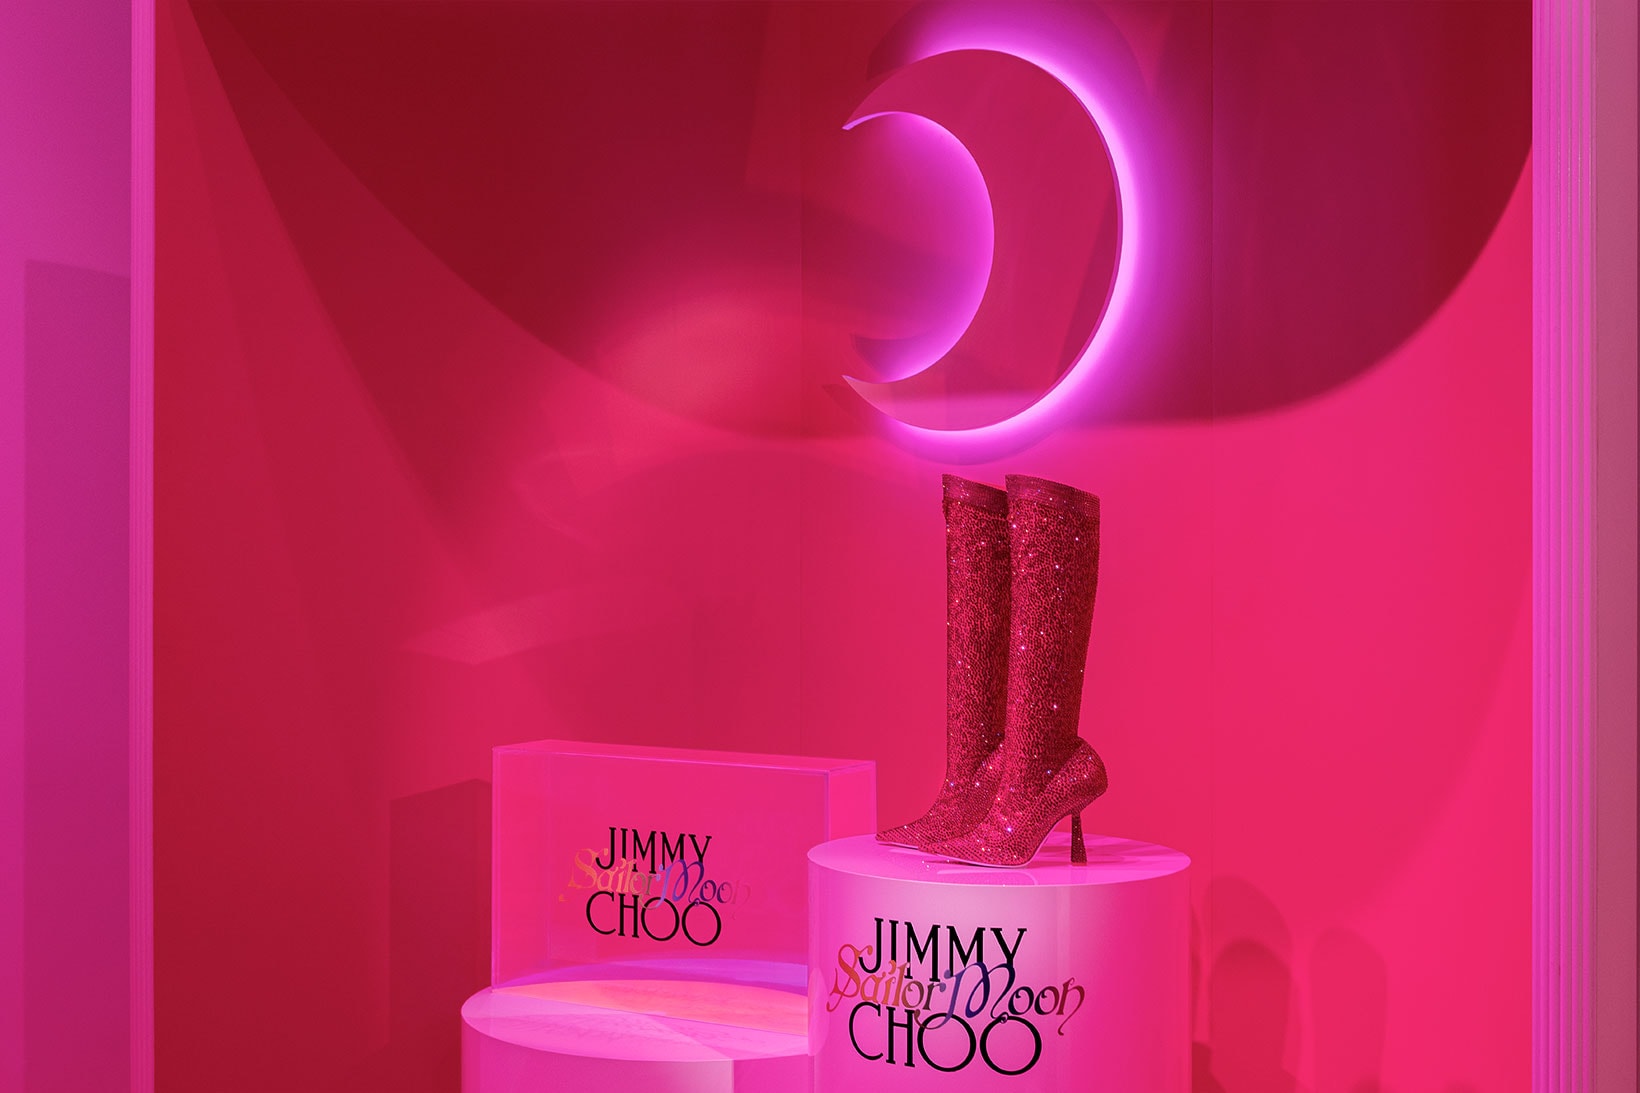 🌙 NEW JIMMY CHOO 🌙 💟 Sailor Moon x Jimmy Choo collab 🌙 Details